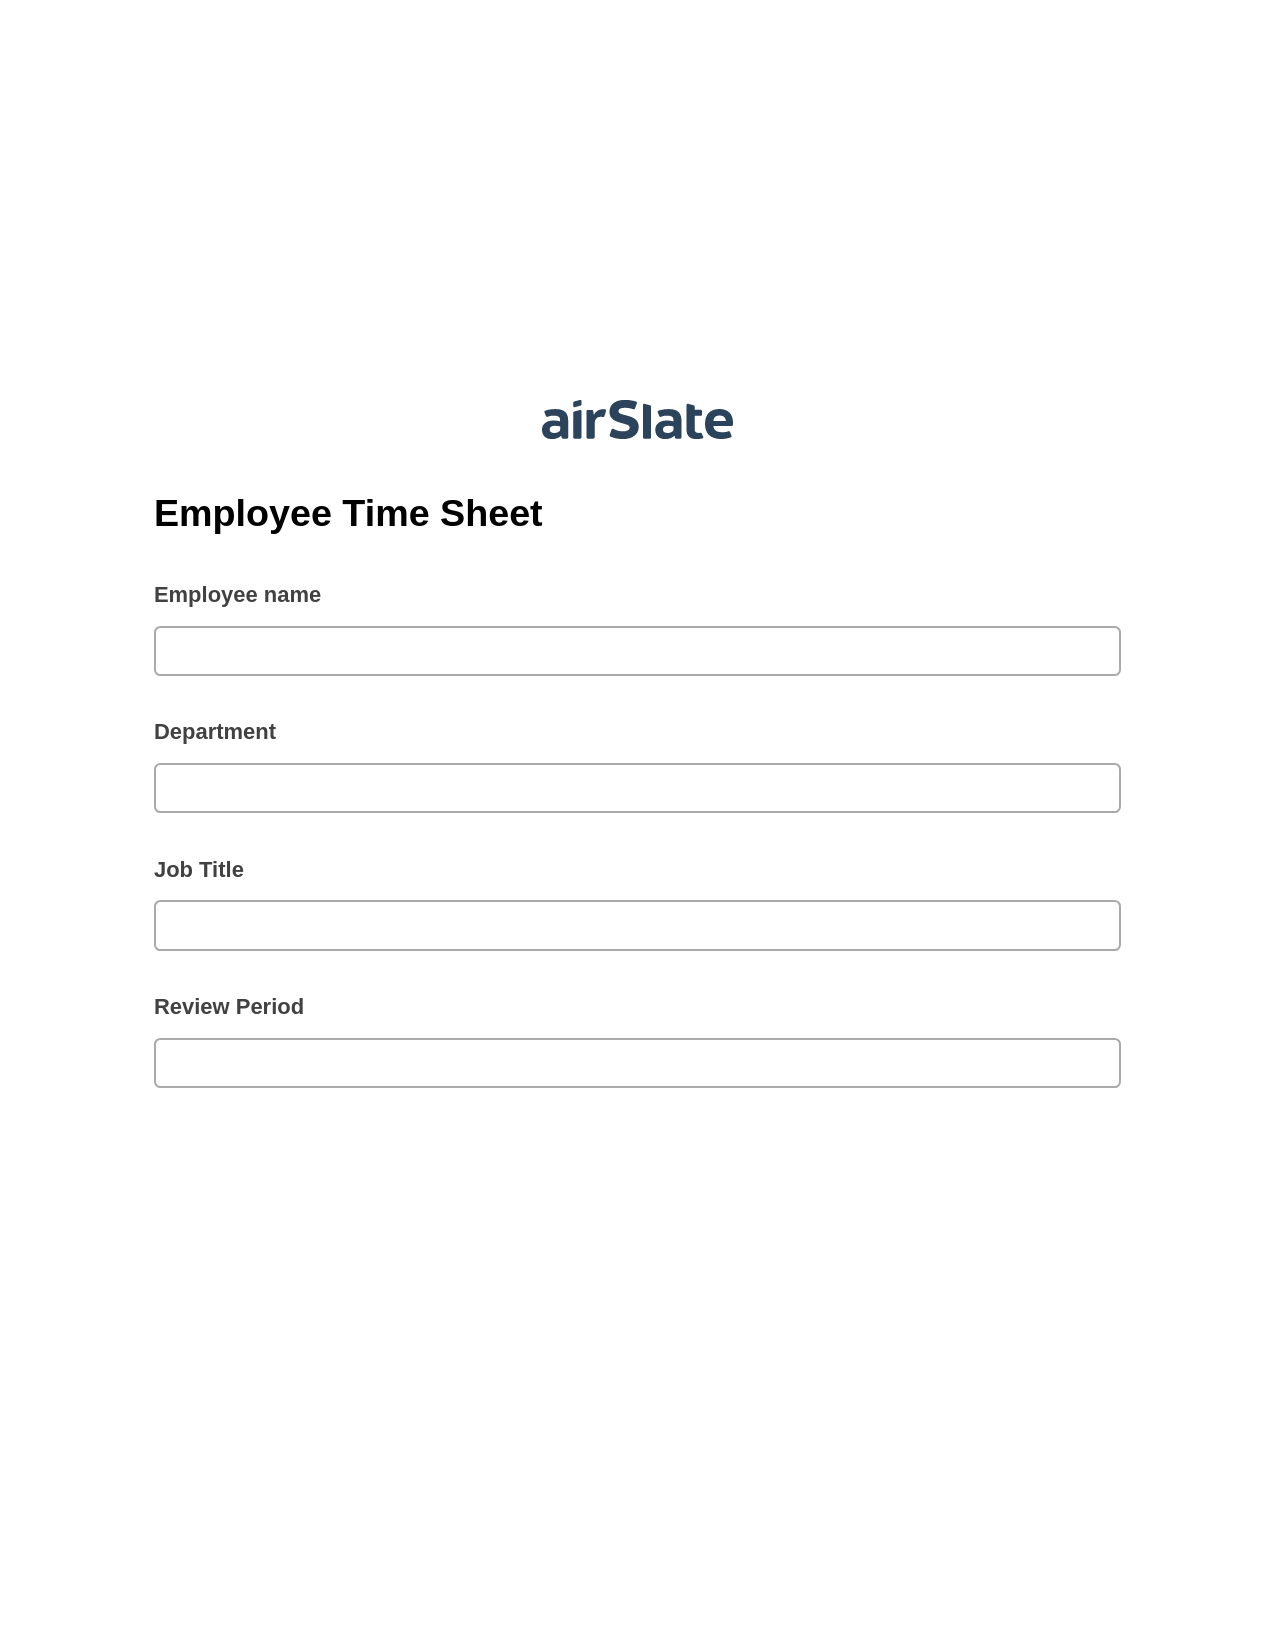 Multirole Employee Time Sheet Pre-fill Dropdowns from Google Sheet Bot, Update Audit Trail Bot, Archive to Google Drive Bot